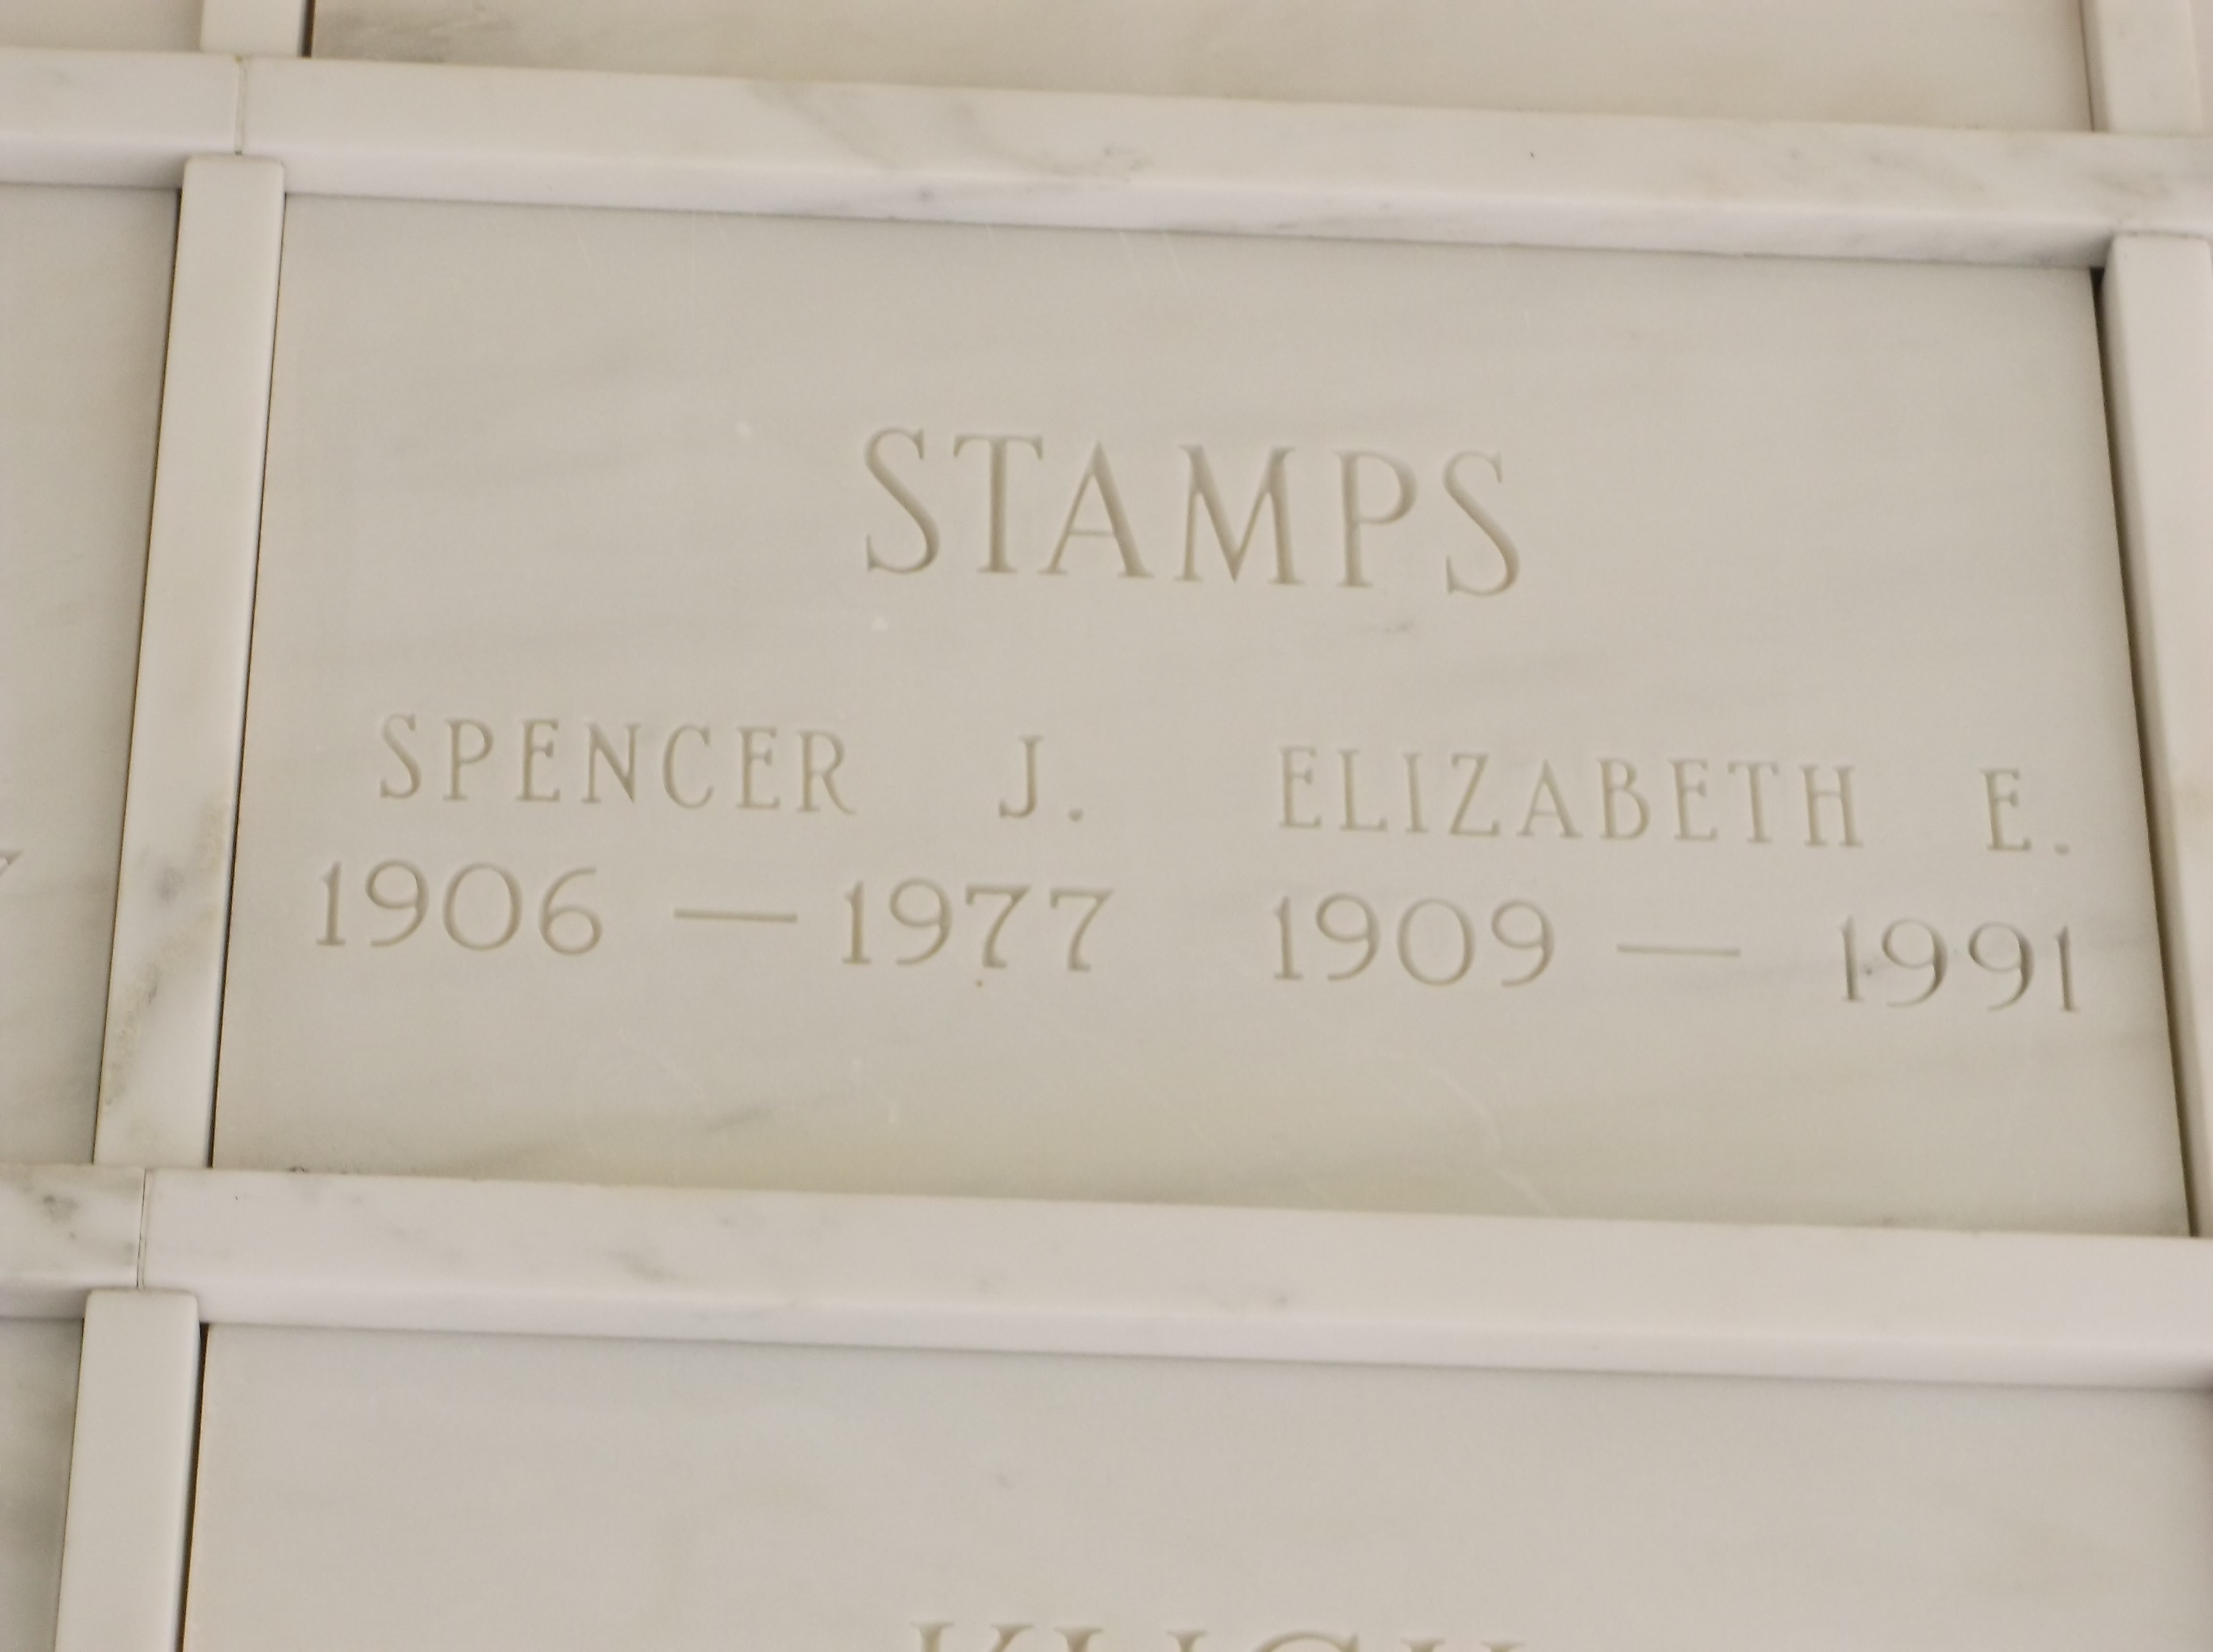 Elizabeth E Stamps